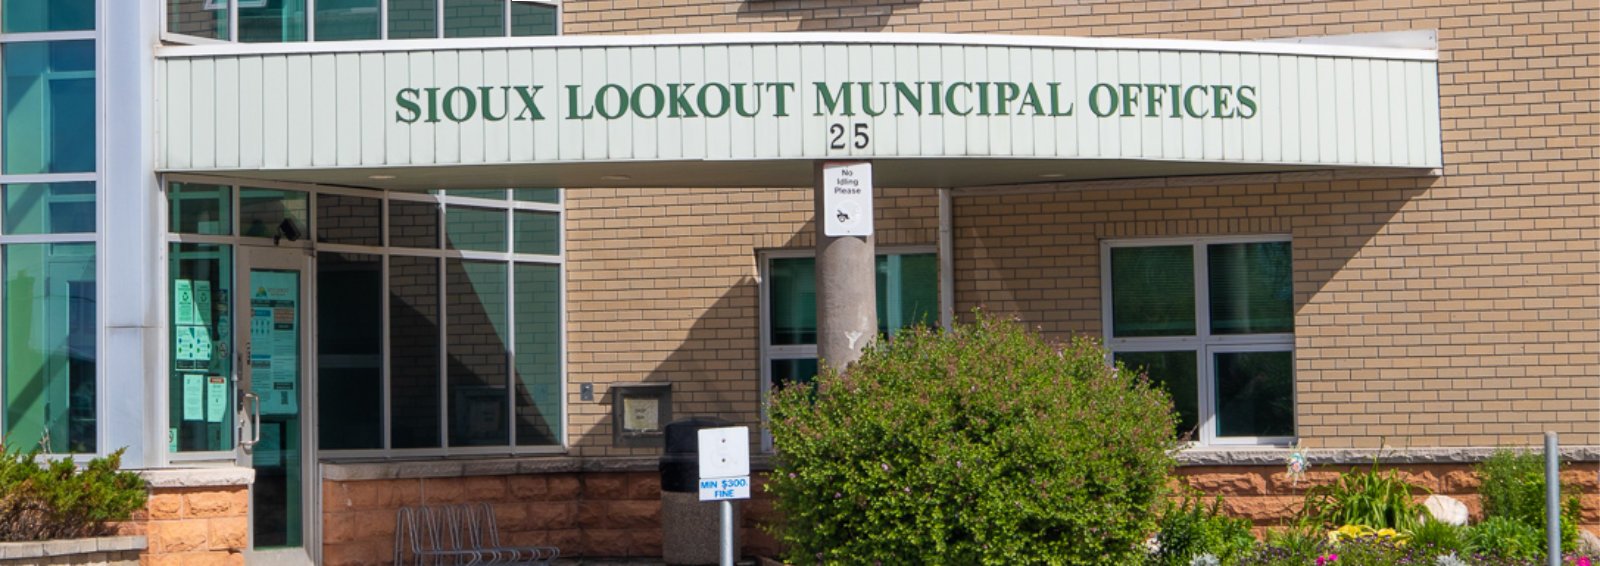 Sioux Lookout Municipal Office